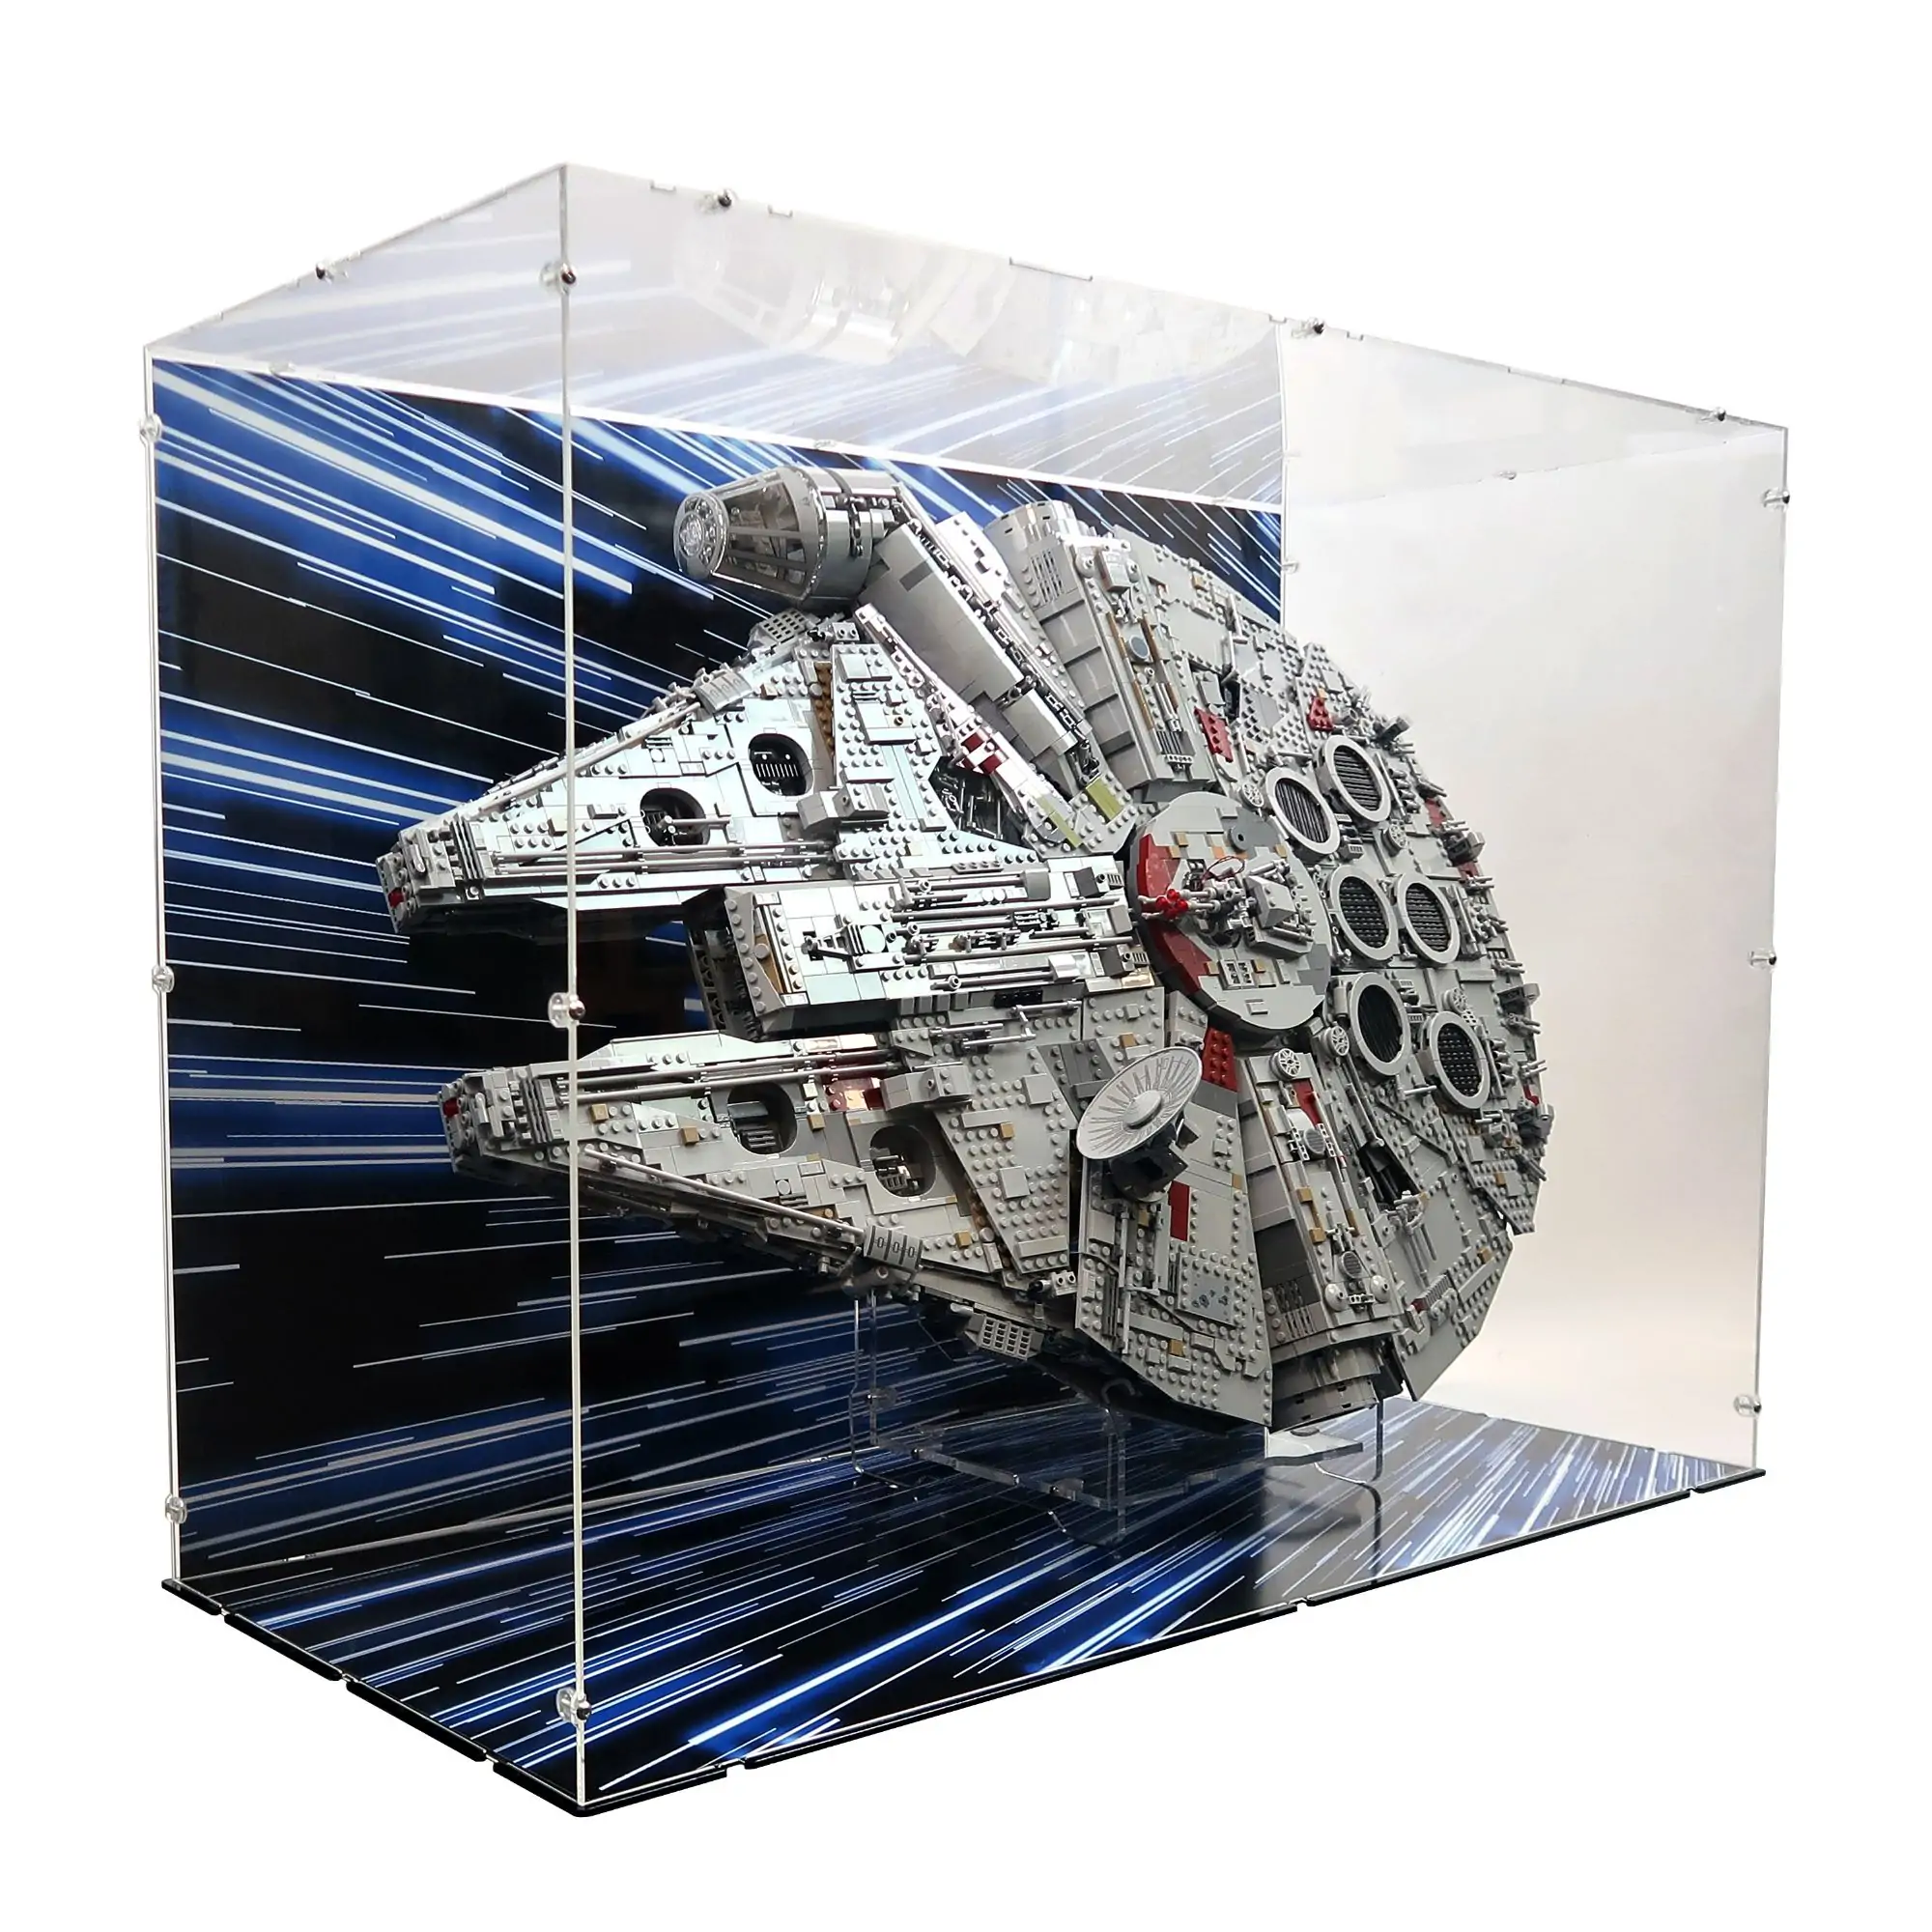 LEGO Star Wars Millennium Falcon Vertical Display Case